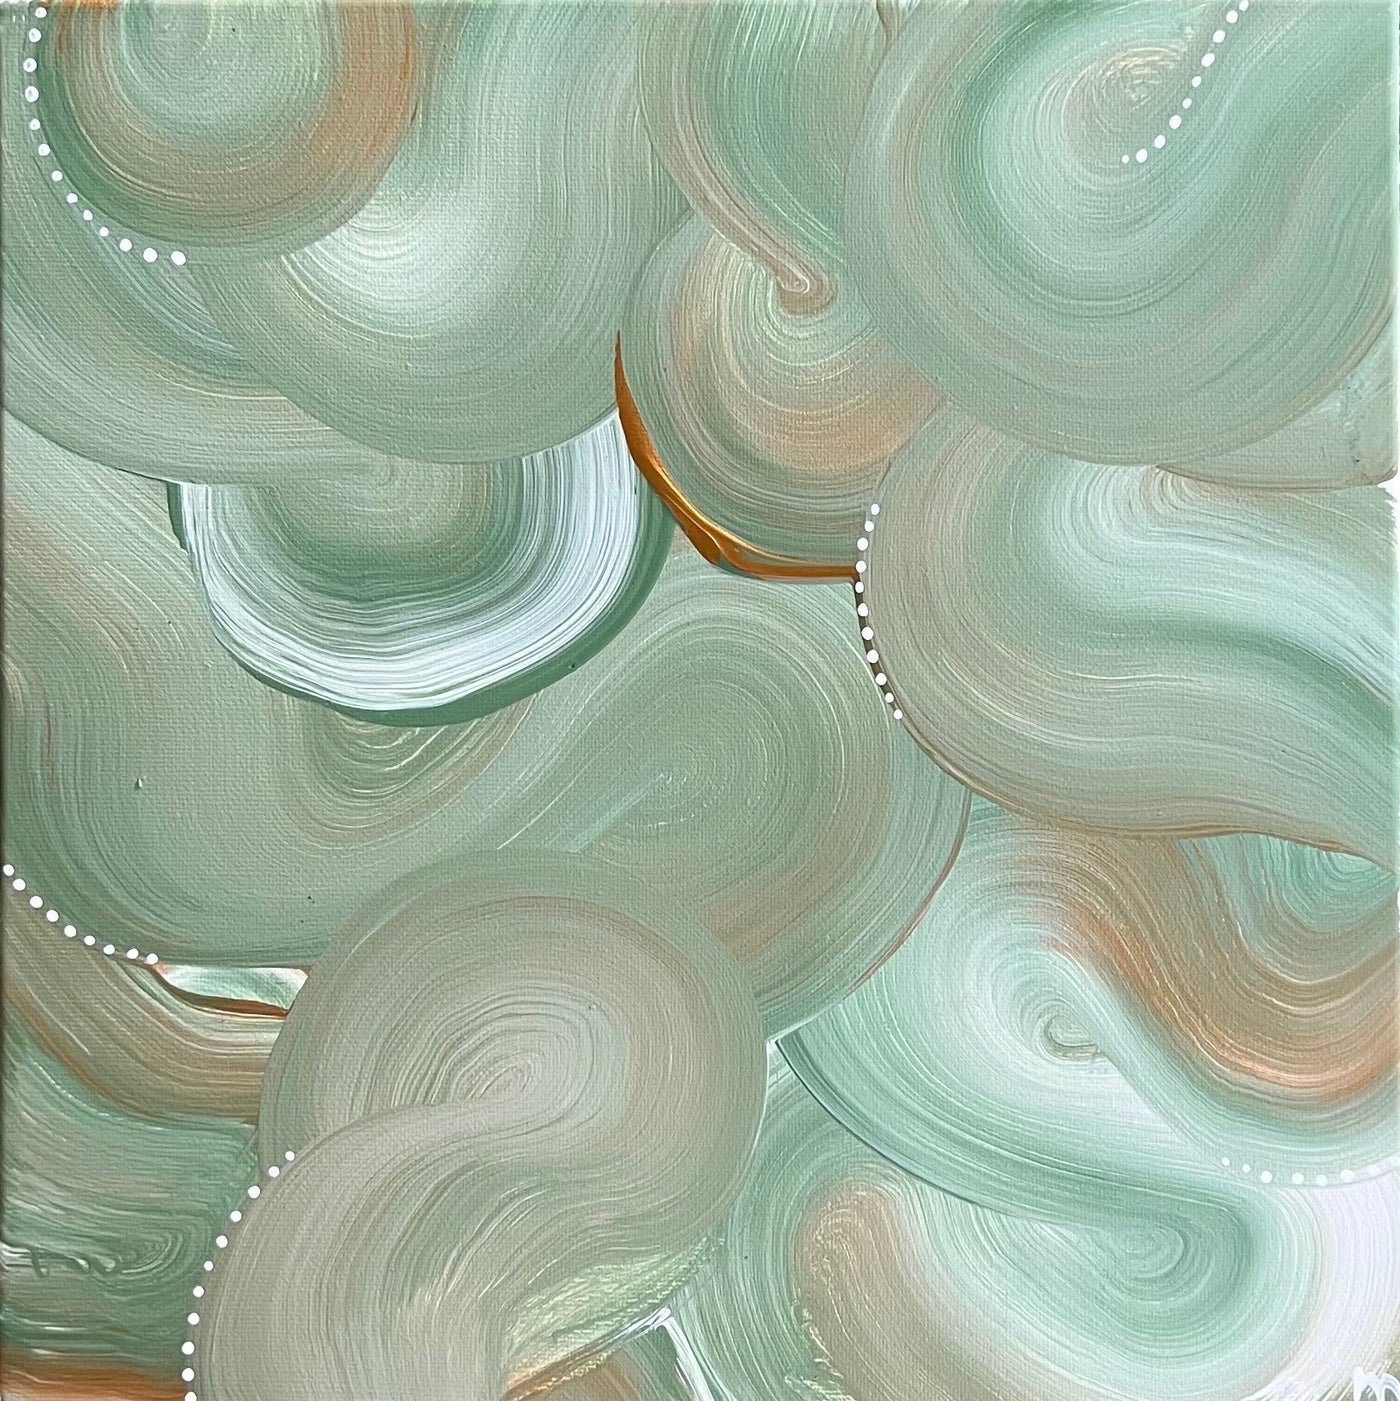 Swirls of Energy Collection,,Mulganai,